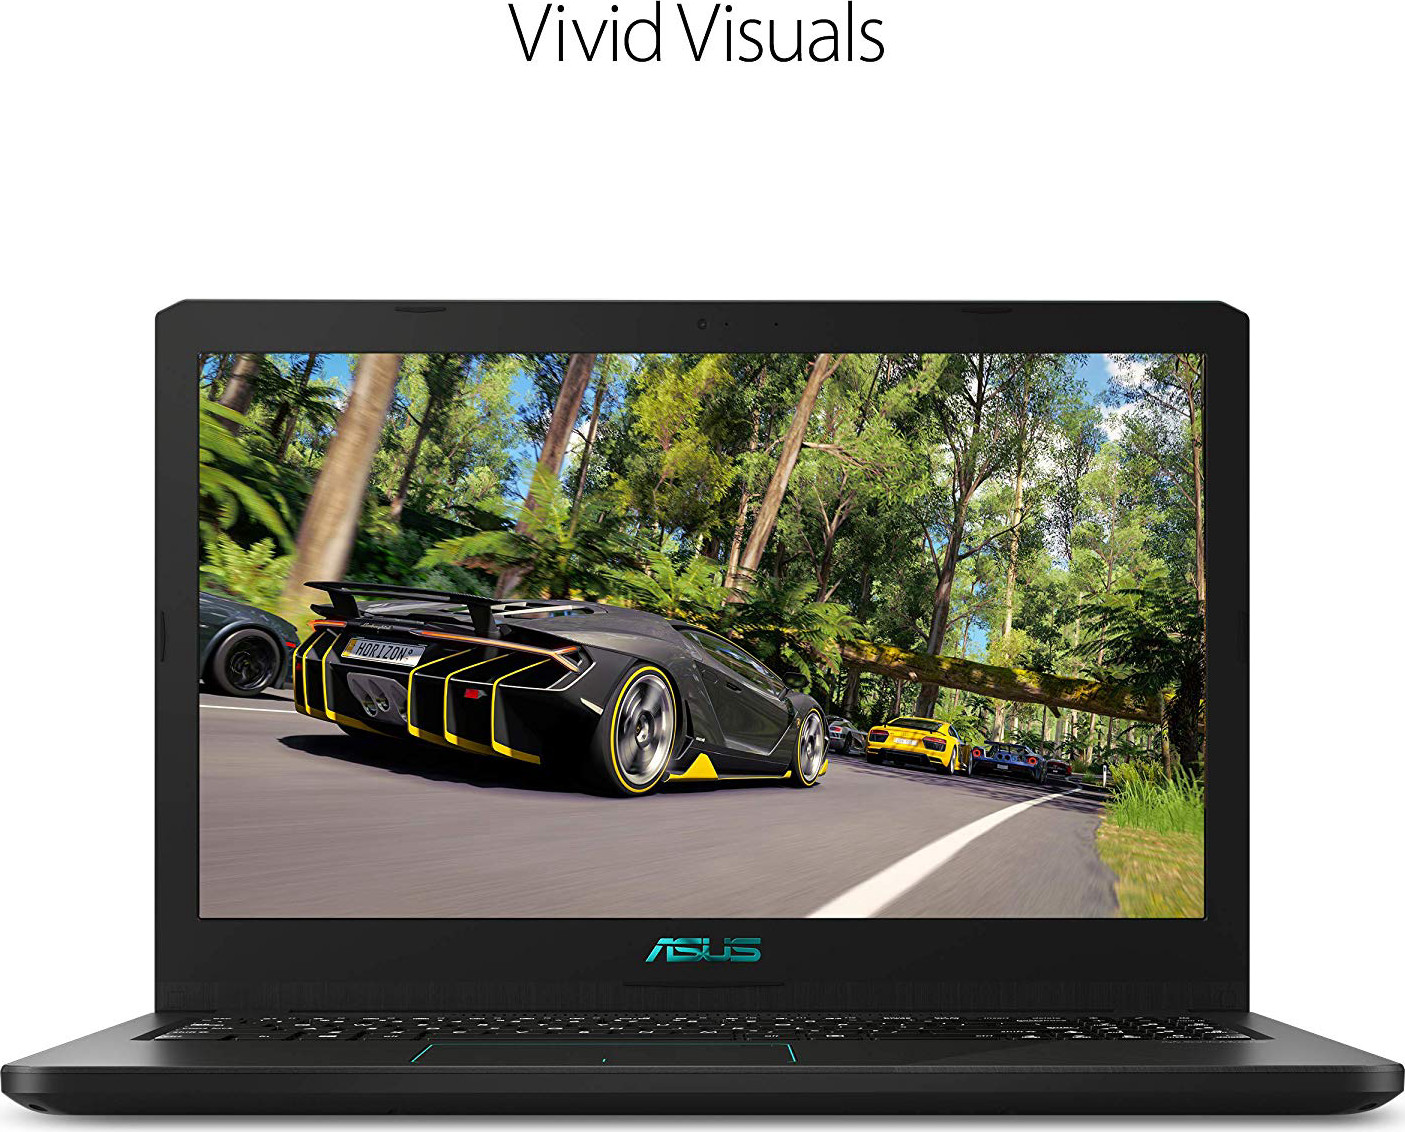 ASUS Vivobook K570ZD Casual Gaming Laptop, 15.6” Full HD IPS Level, AMD Quad Core Ryzen 5 2500U CPU, GeForce GTX 1050, 8GB DDR4, 256GB SSD, Fingerprint Reader, Backlit KB, Windows 10 – K570ZD-ES51